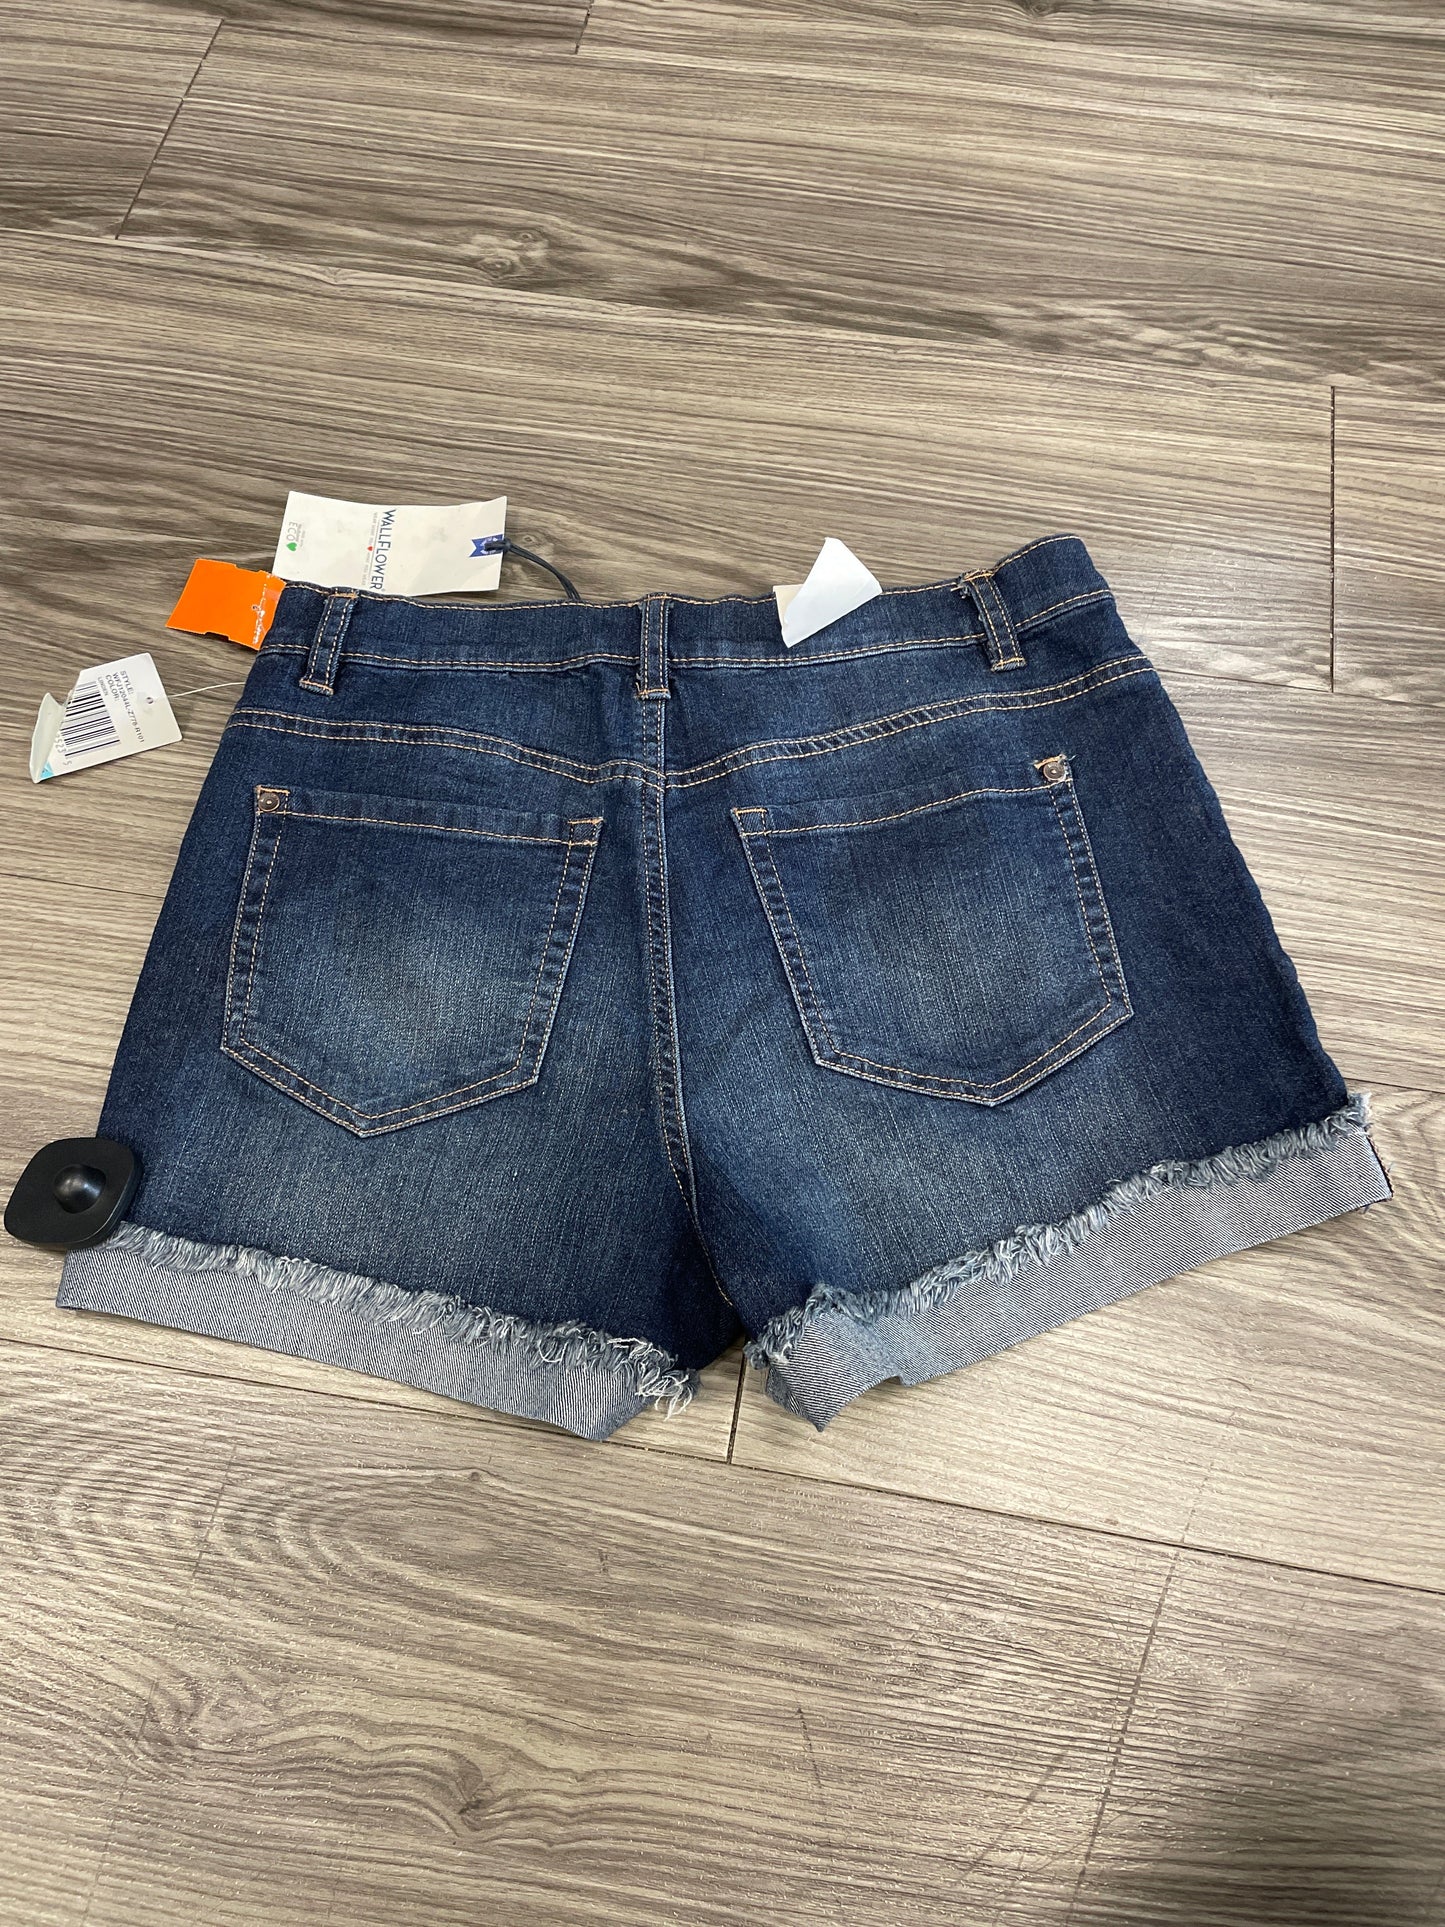 Shorts By Wallflower  Size: 4